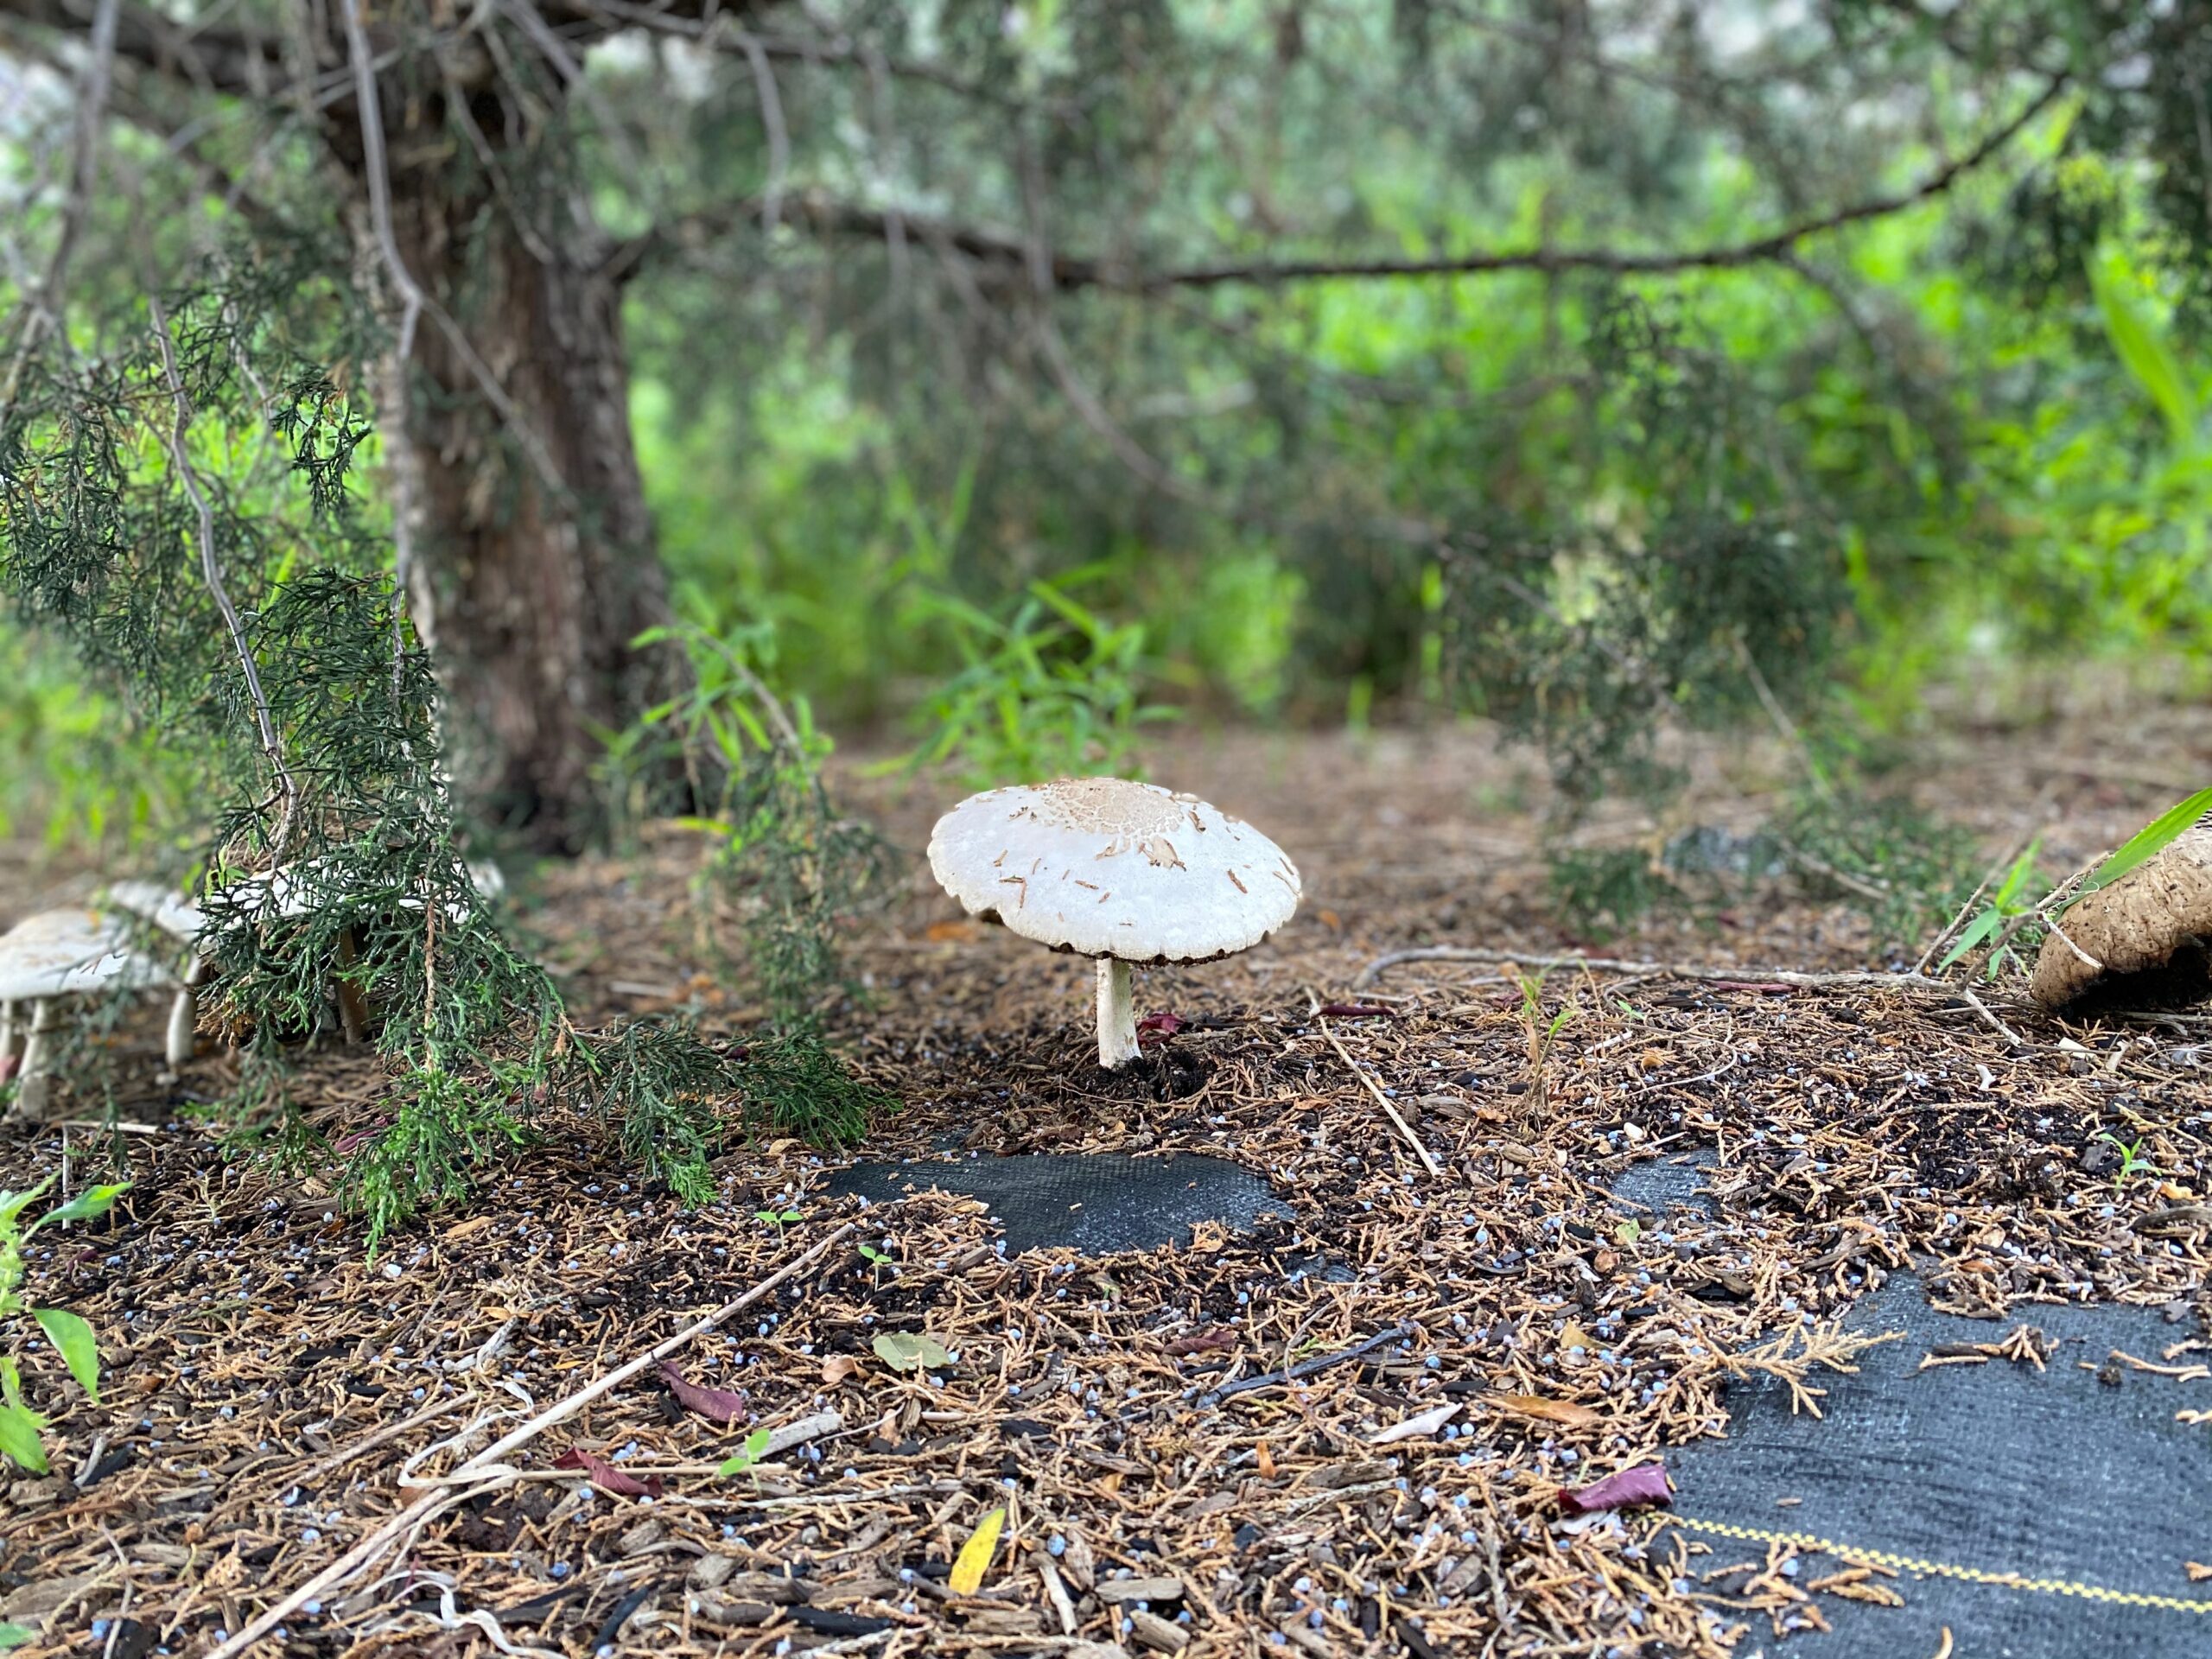 A mushroom sits on the Habitat Garden path